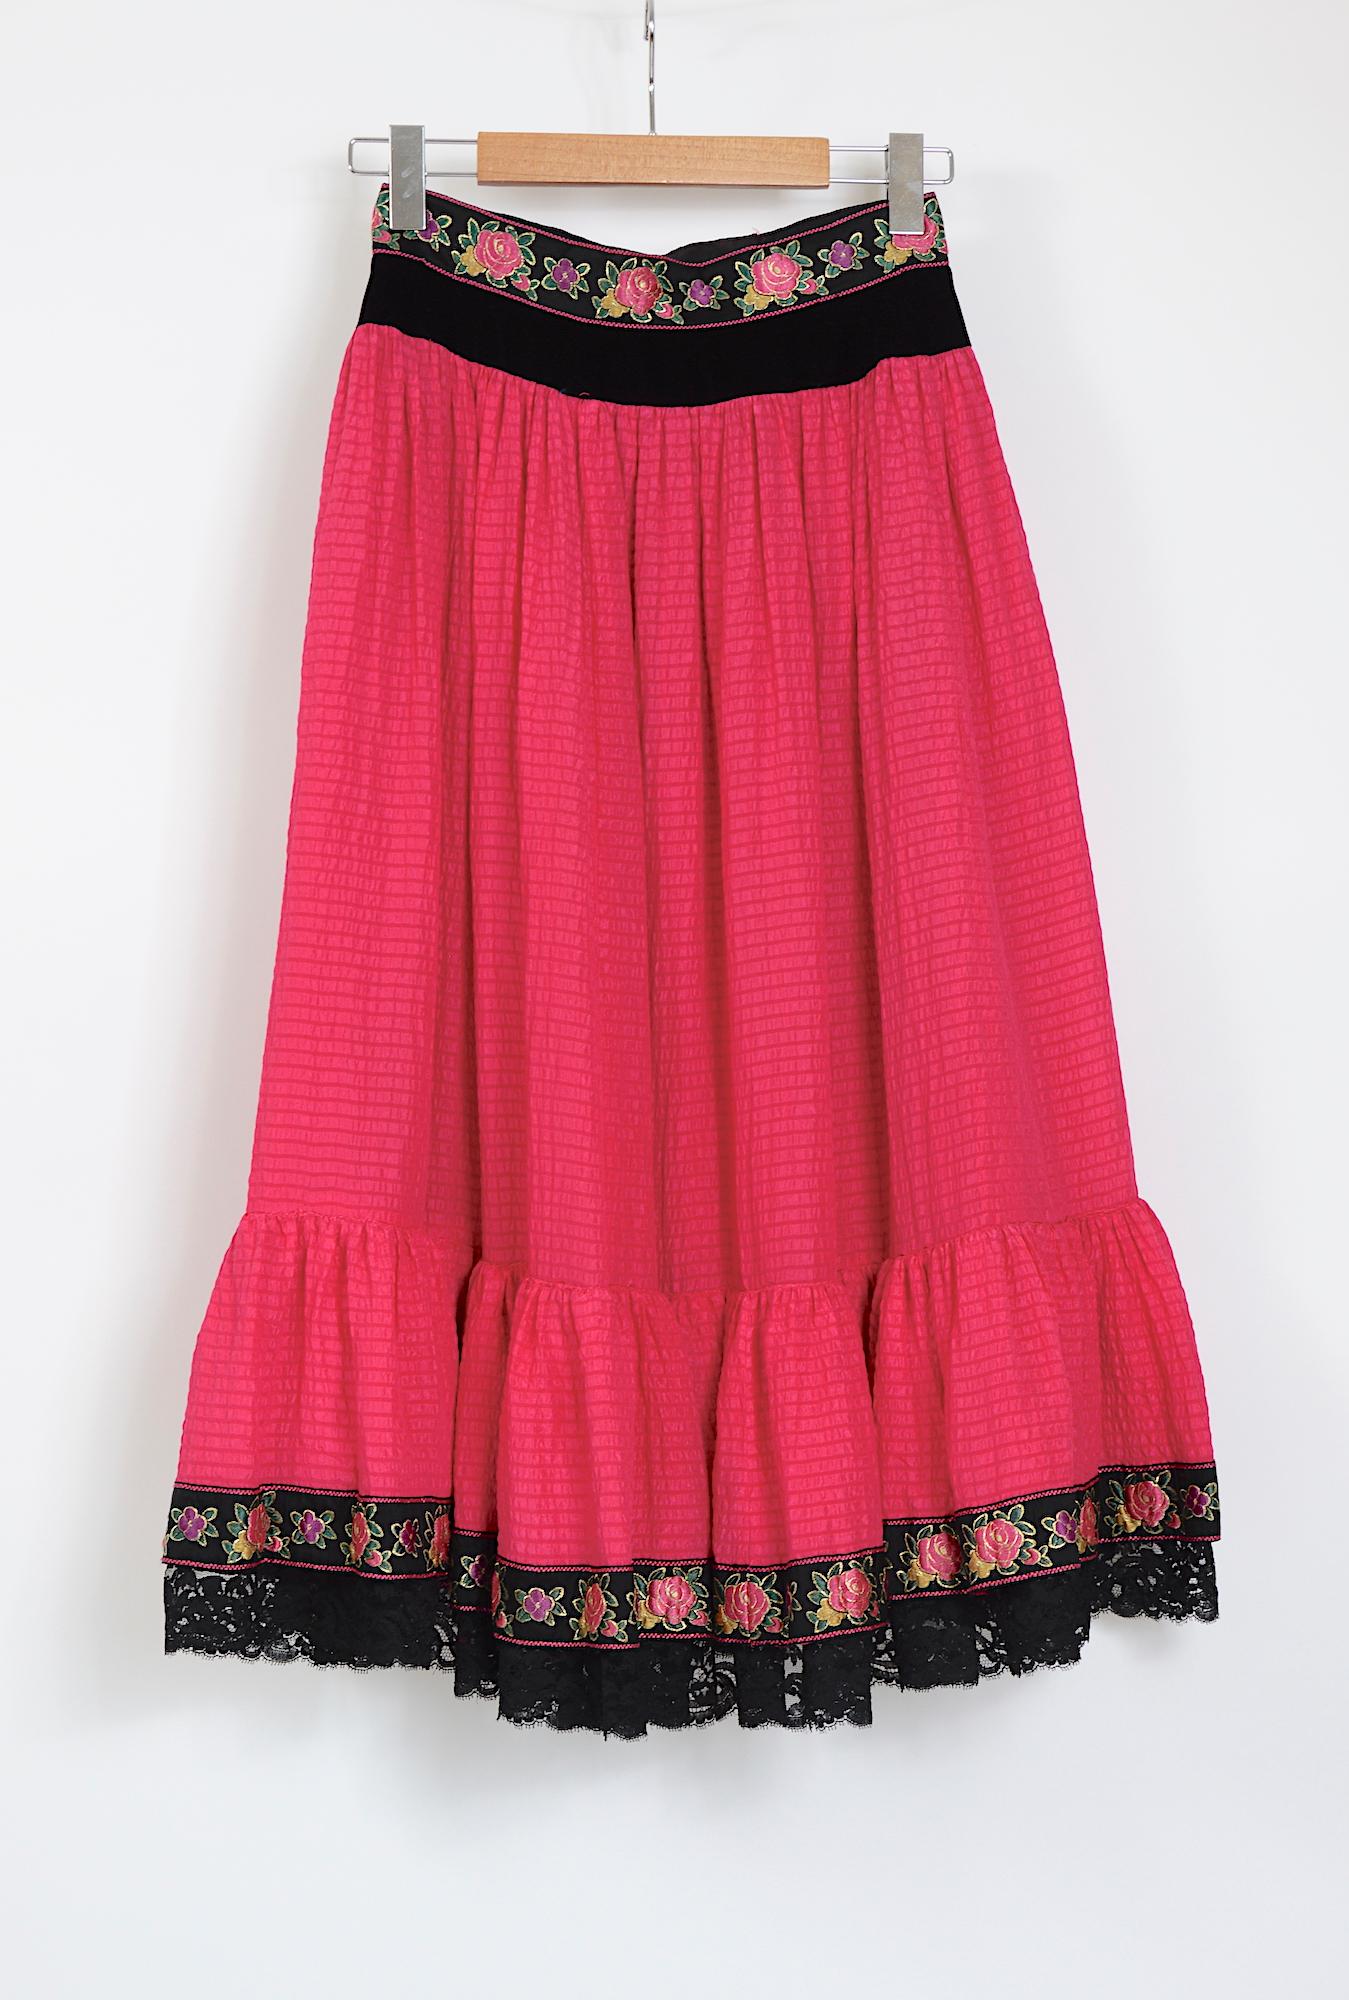 Women's Lanvin 1970s vintage silk boho peasant style skirt For Sale